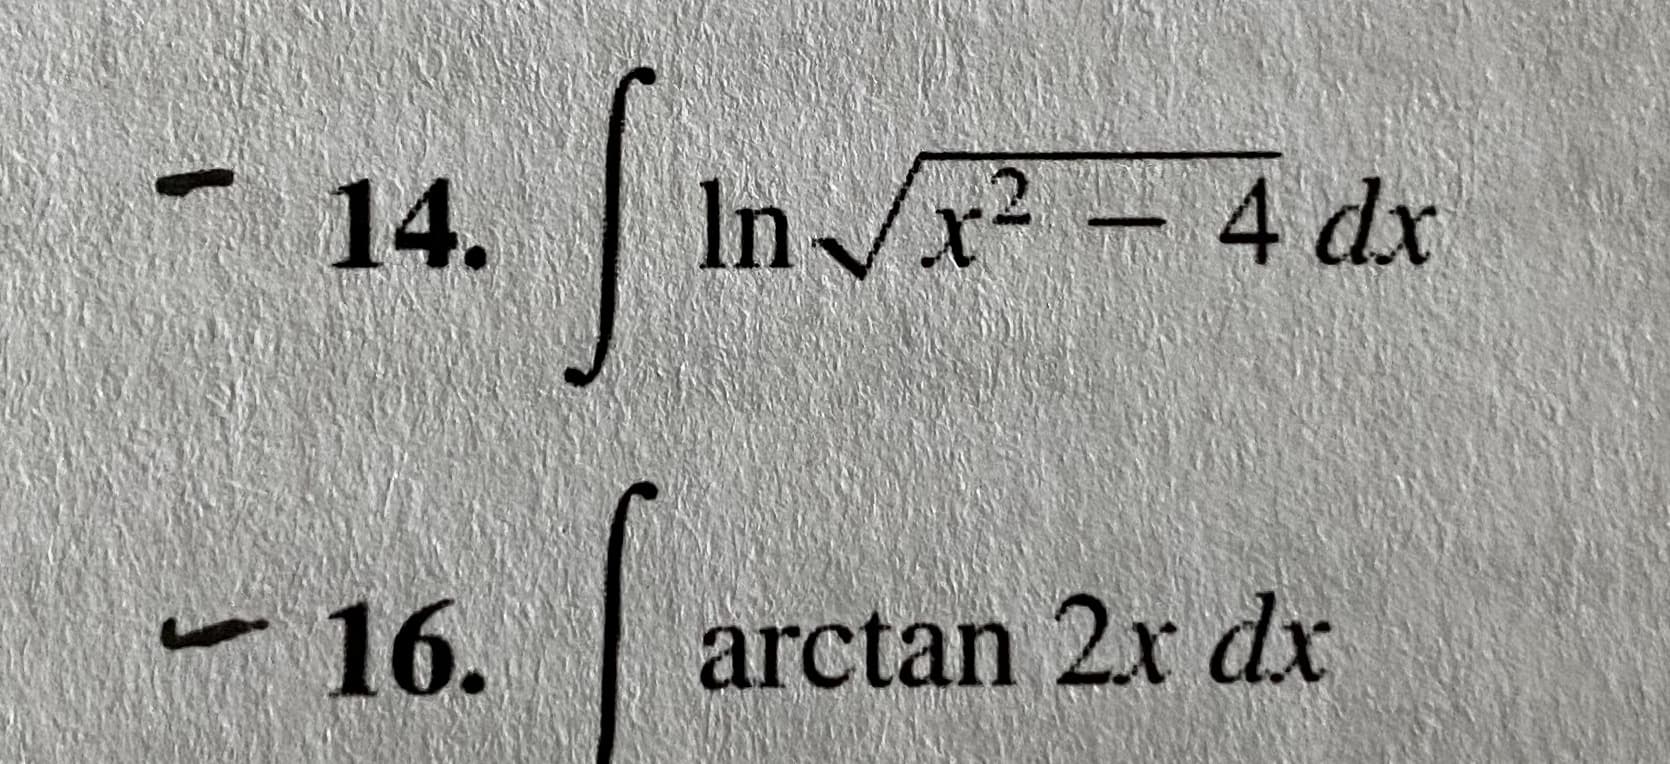 In /x - 4 dx
14.
16.
arctan 2r dx
